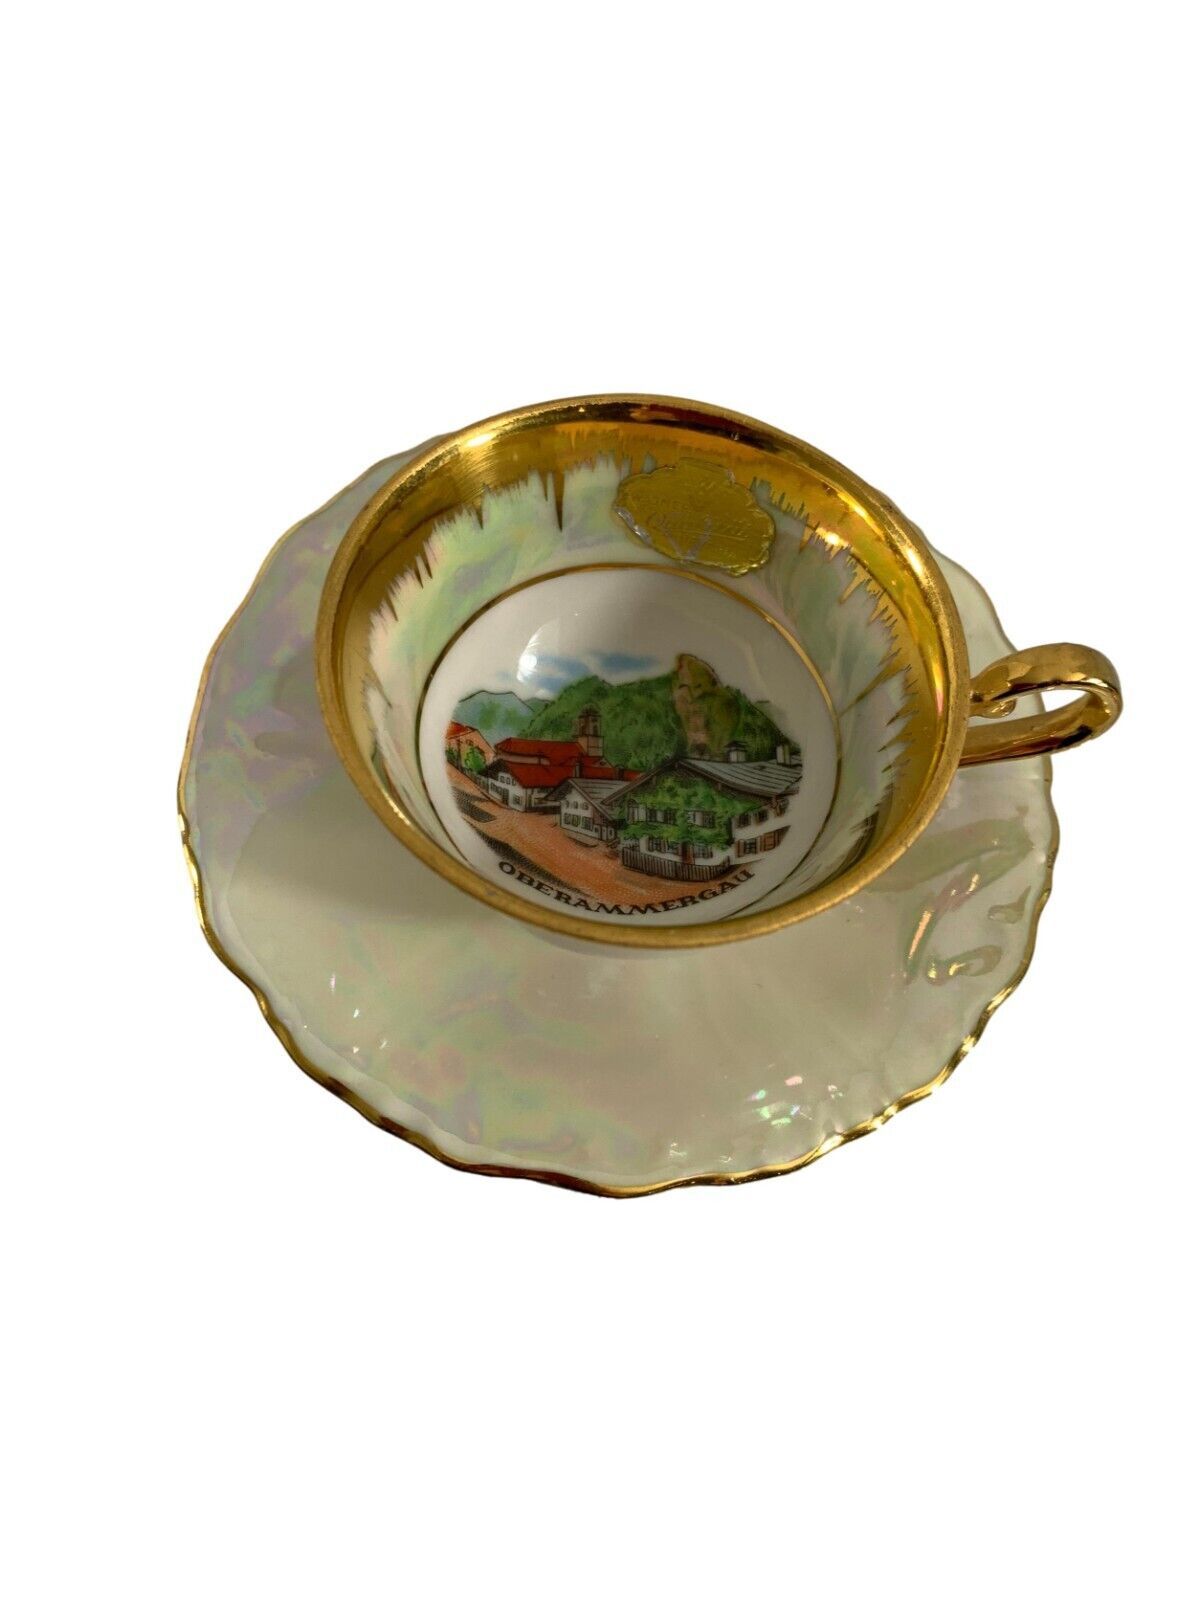 Primary image for Demitasse Cup Saucer Teacup Germany Souvenir Gold Ornate Oberammergau